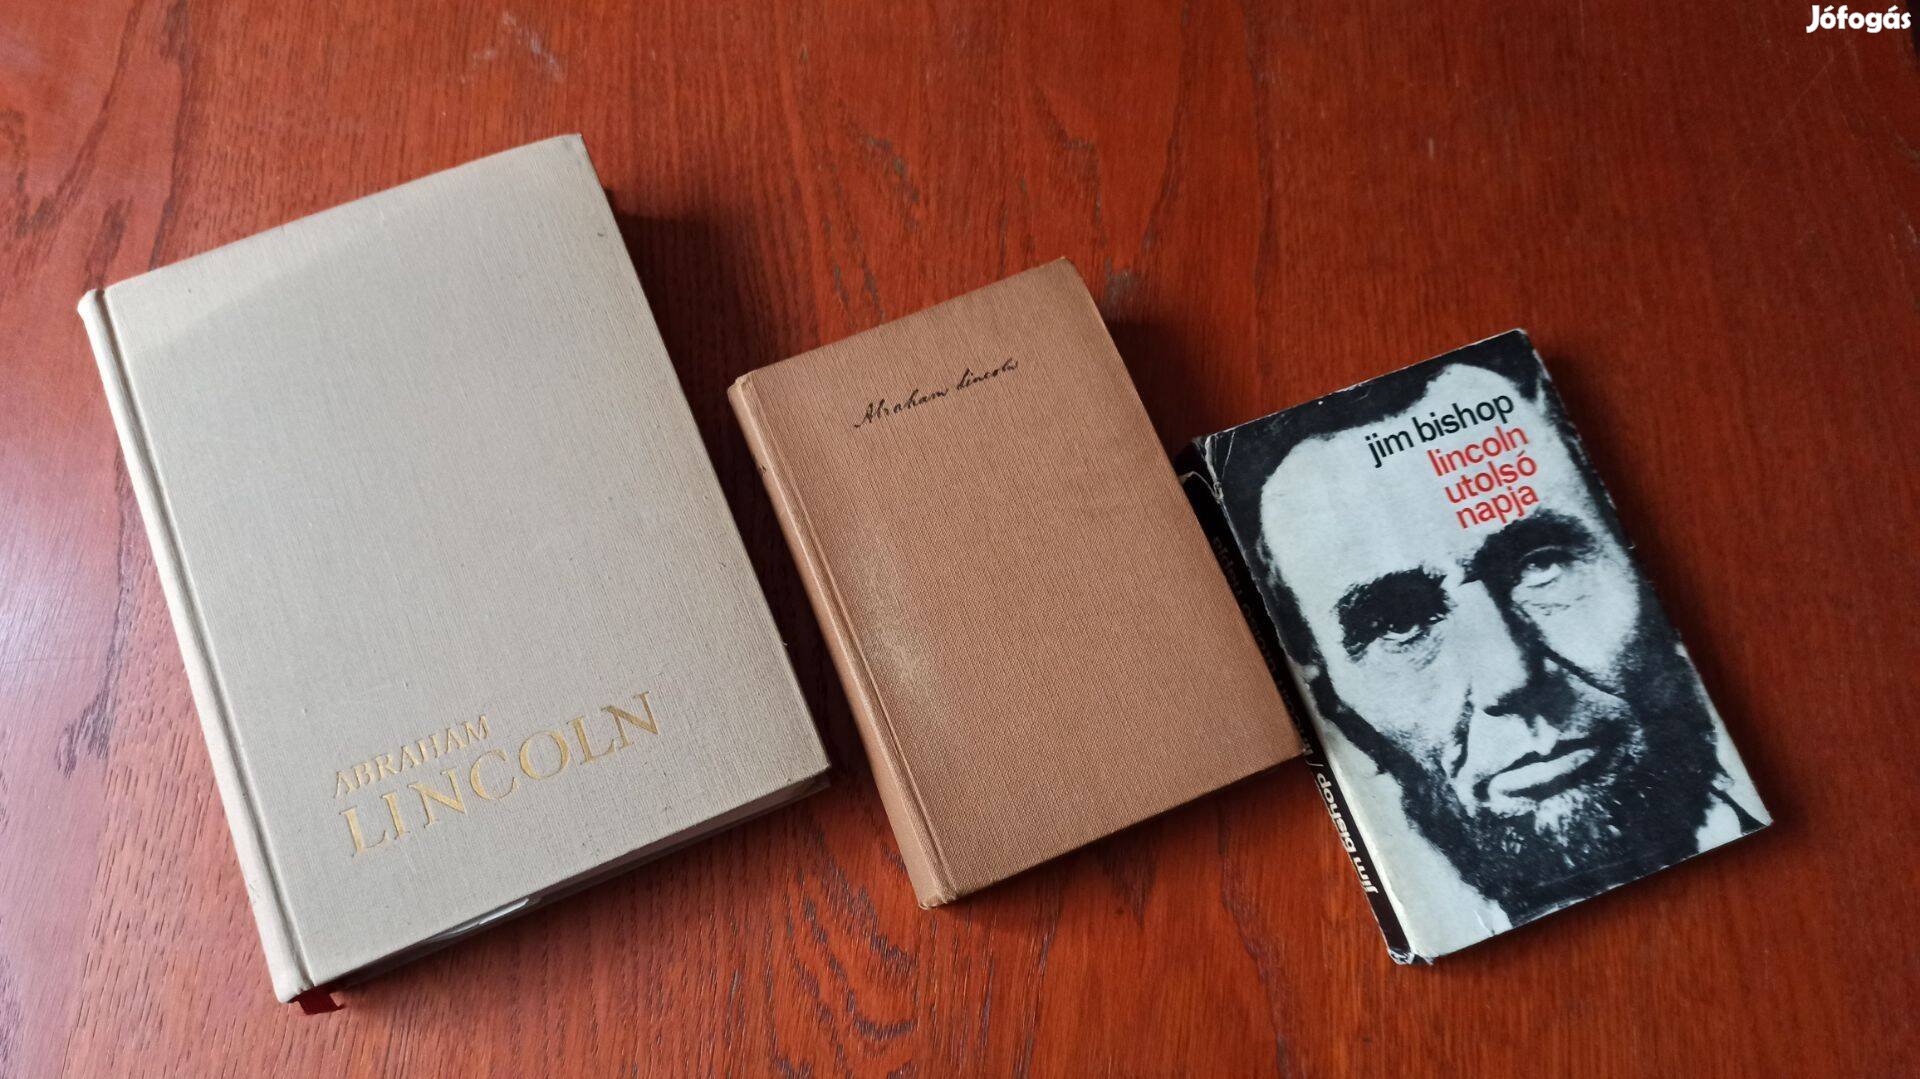 Lincoln könyvcsomag / 3 db könyv